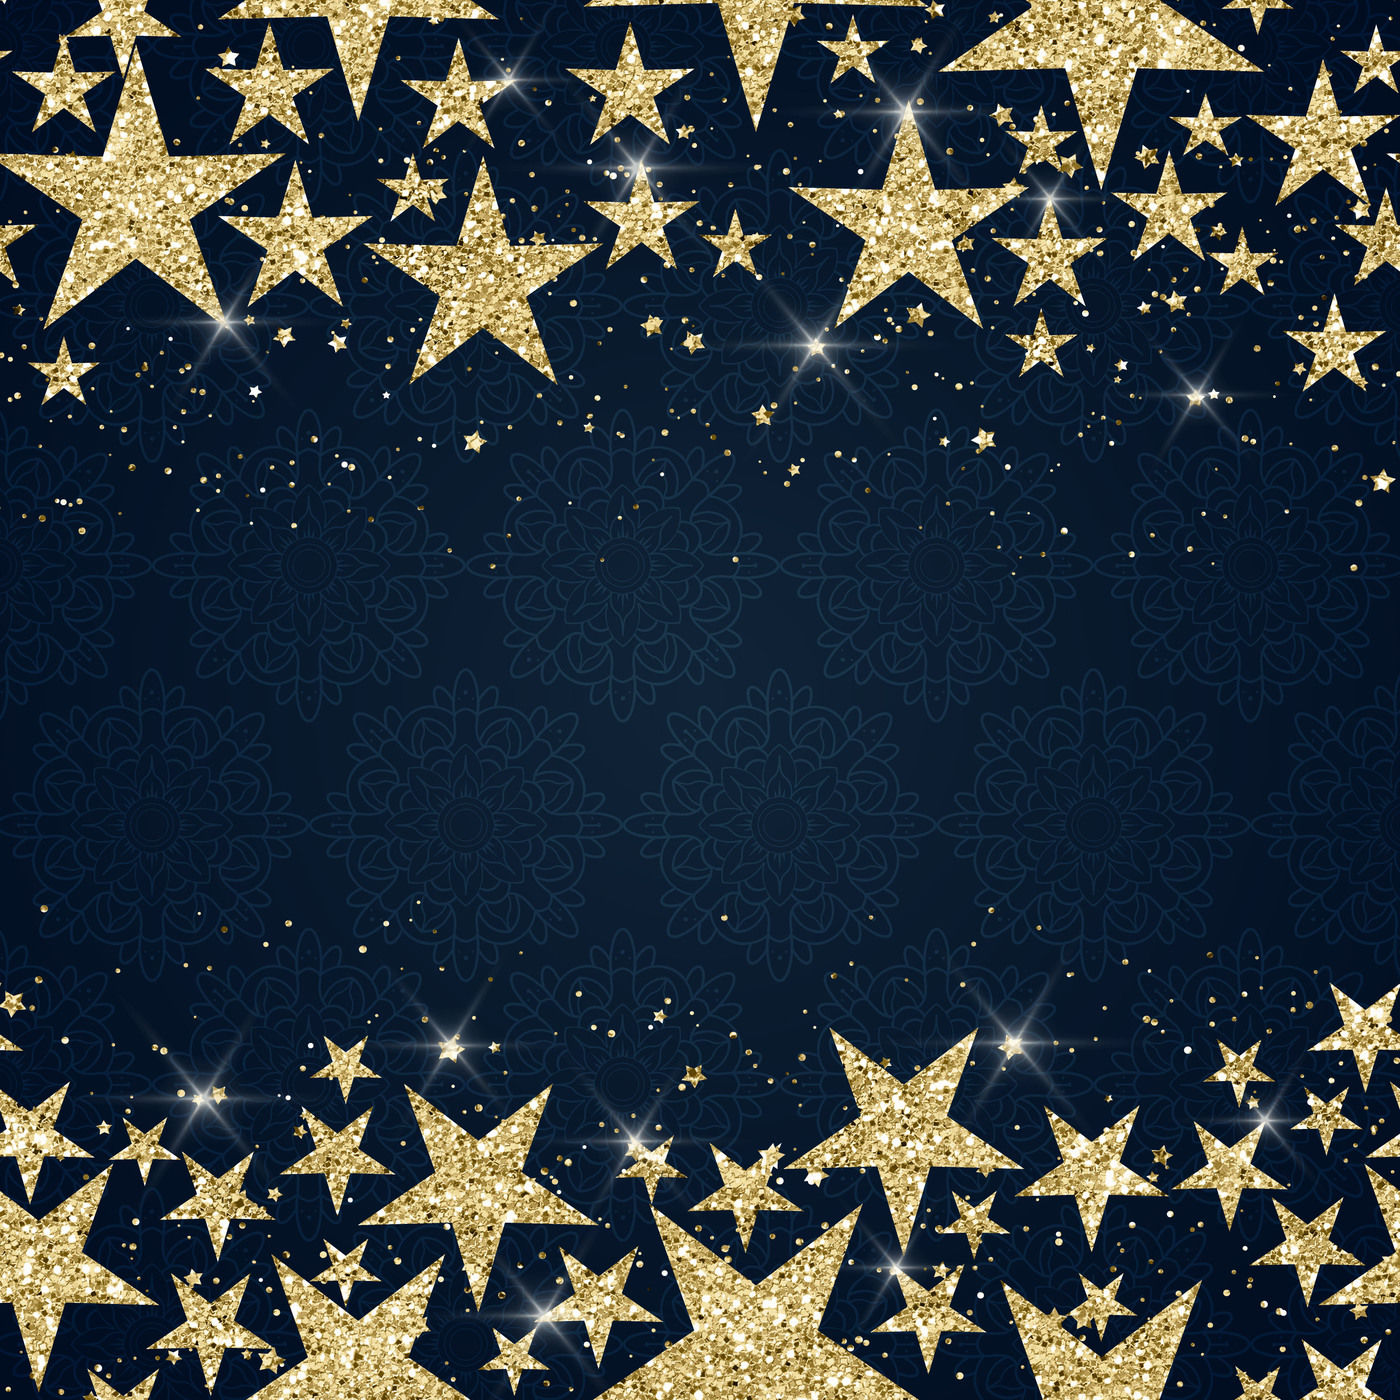 16 Seamless Glitter Star Overlay Transparent Images By ArtInsider